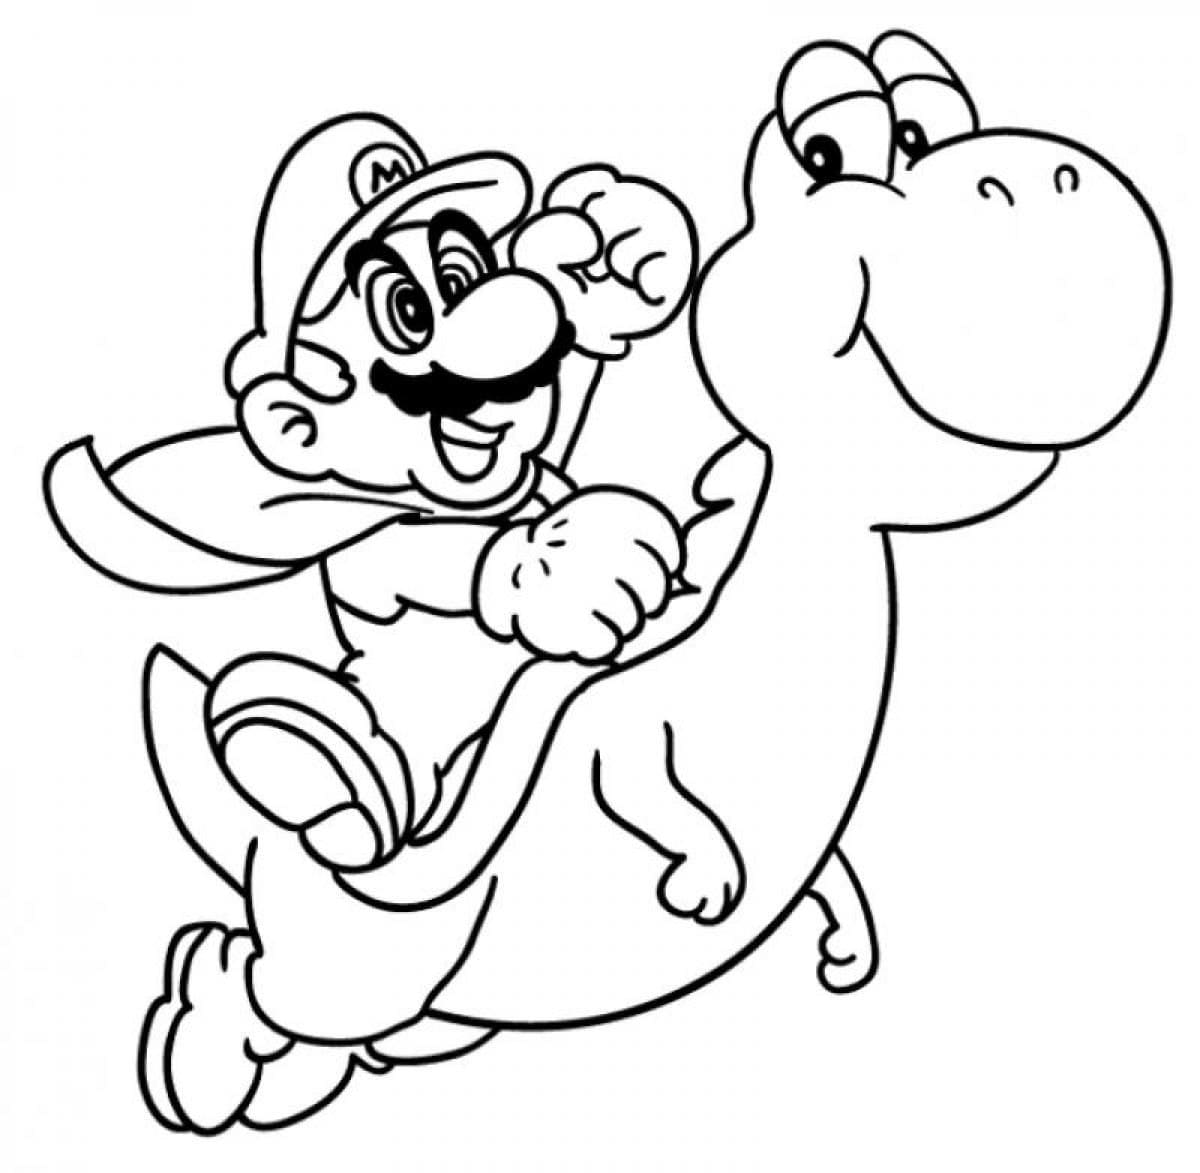 Super Mario Image For Kids